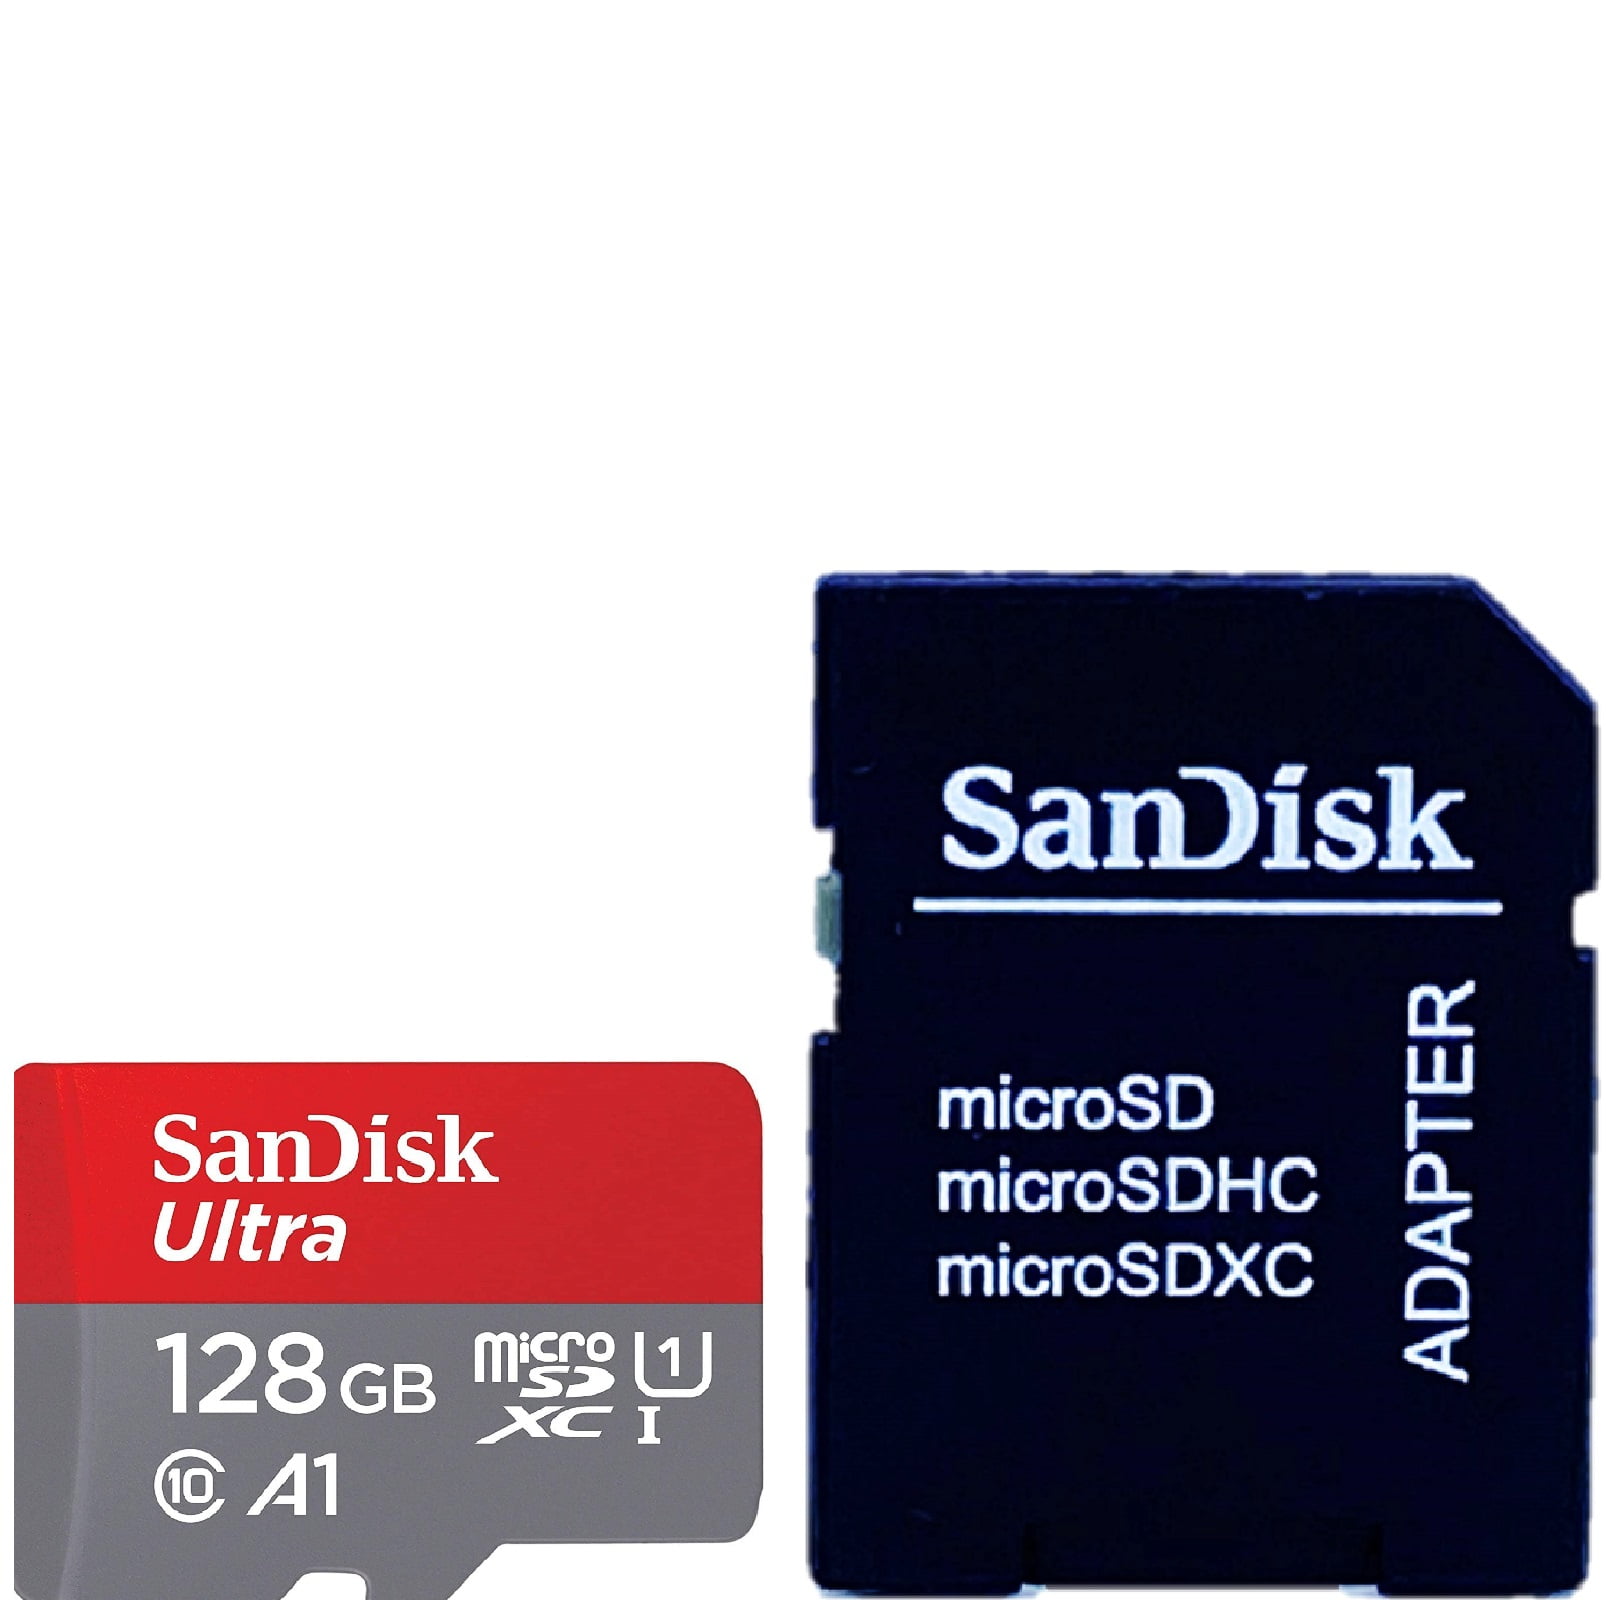 Carte Micro SD 16Go  16GB MicroSD Classe 10 Compatible avec Kindle Fire 7,  Kids Edition, Fire HD 8 - HD8, Fire HD 10 - HDX [270] - Cdiscount Appareil  Photo